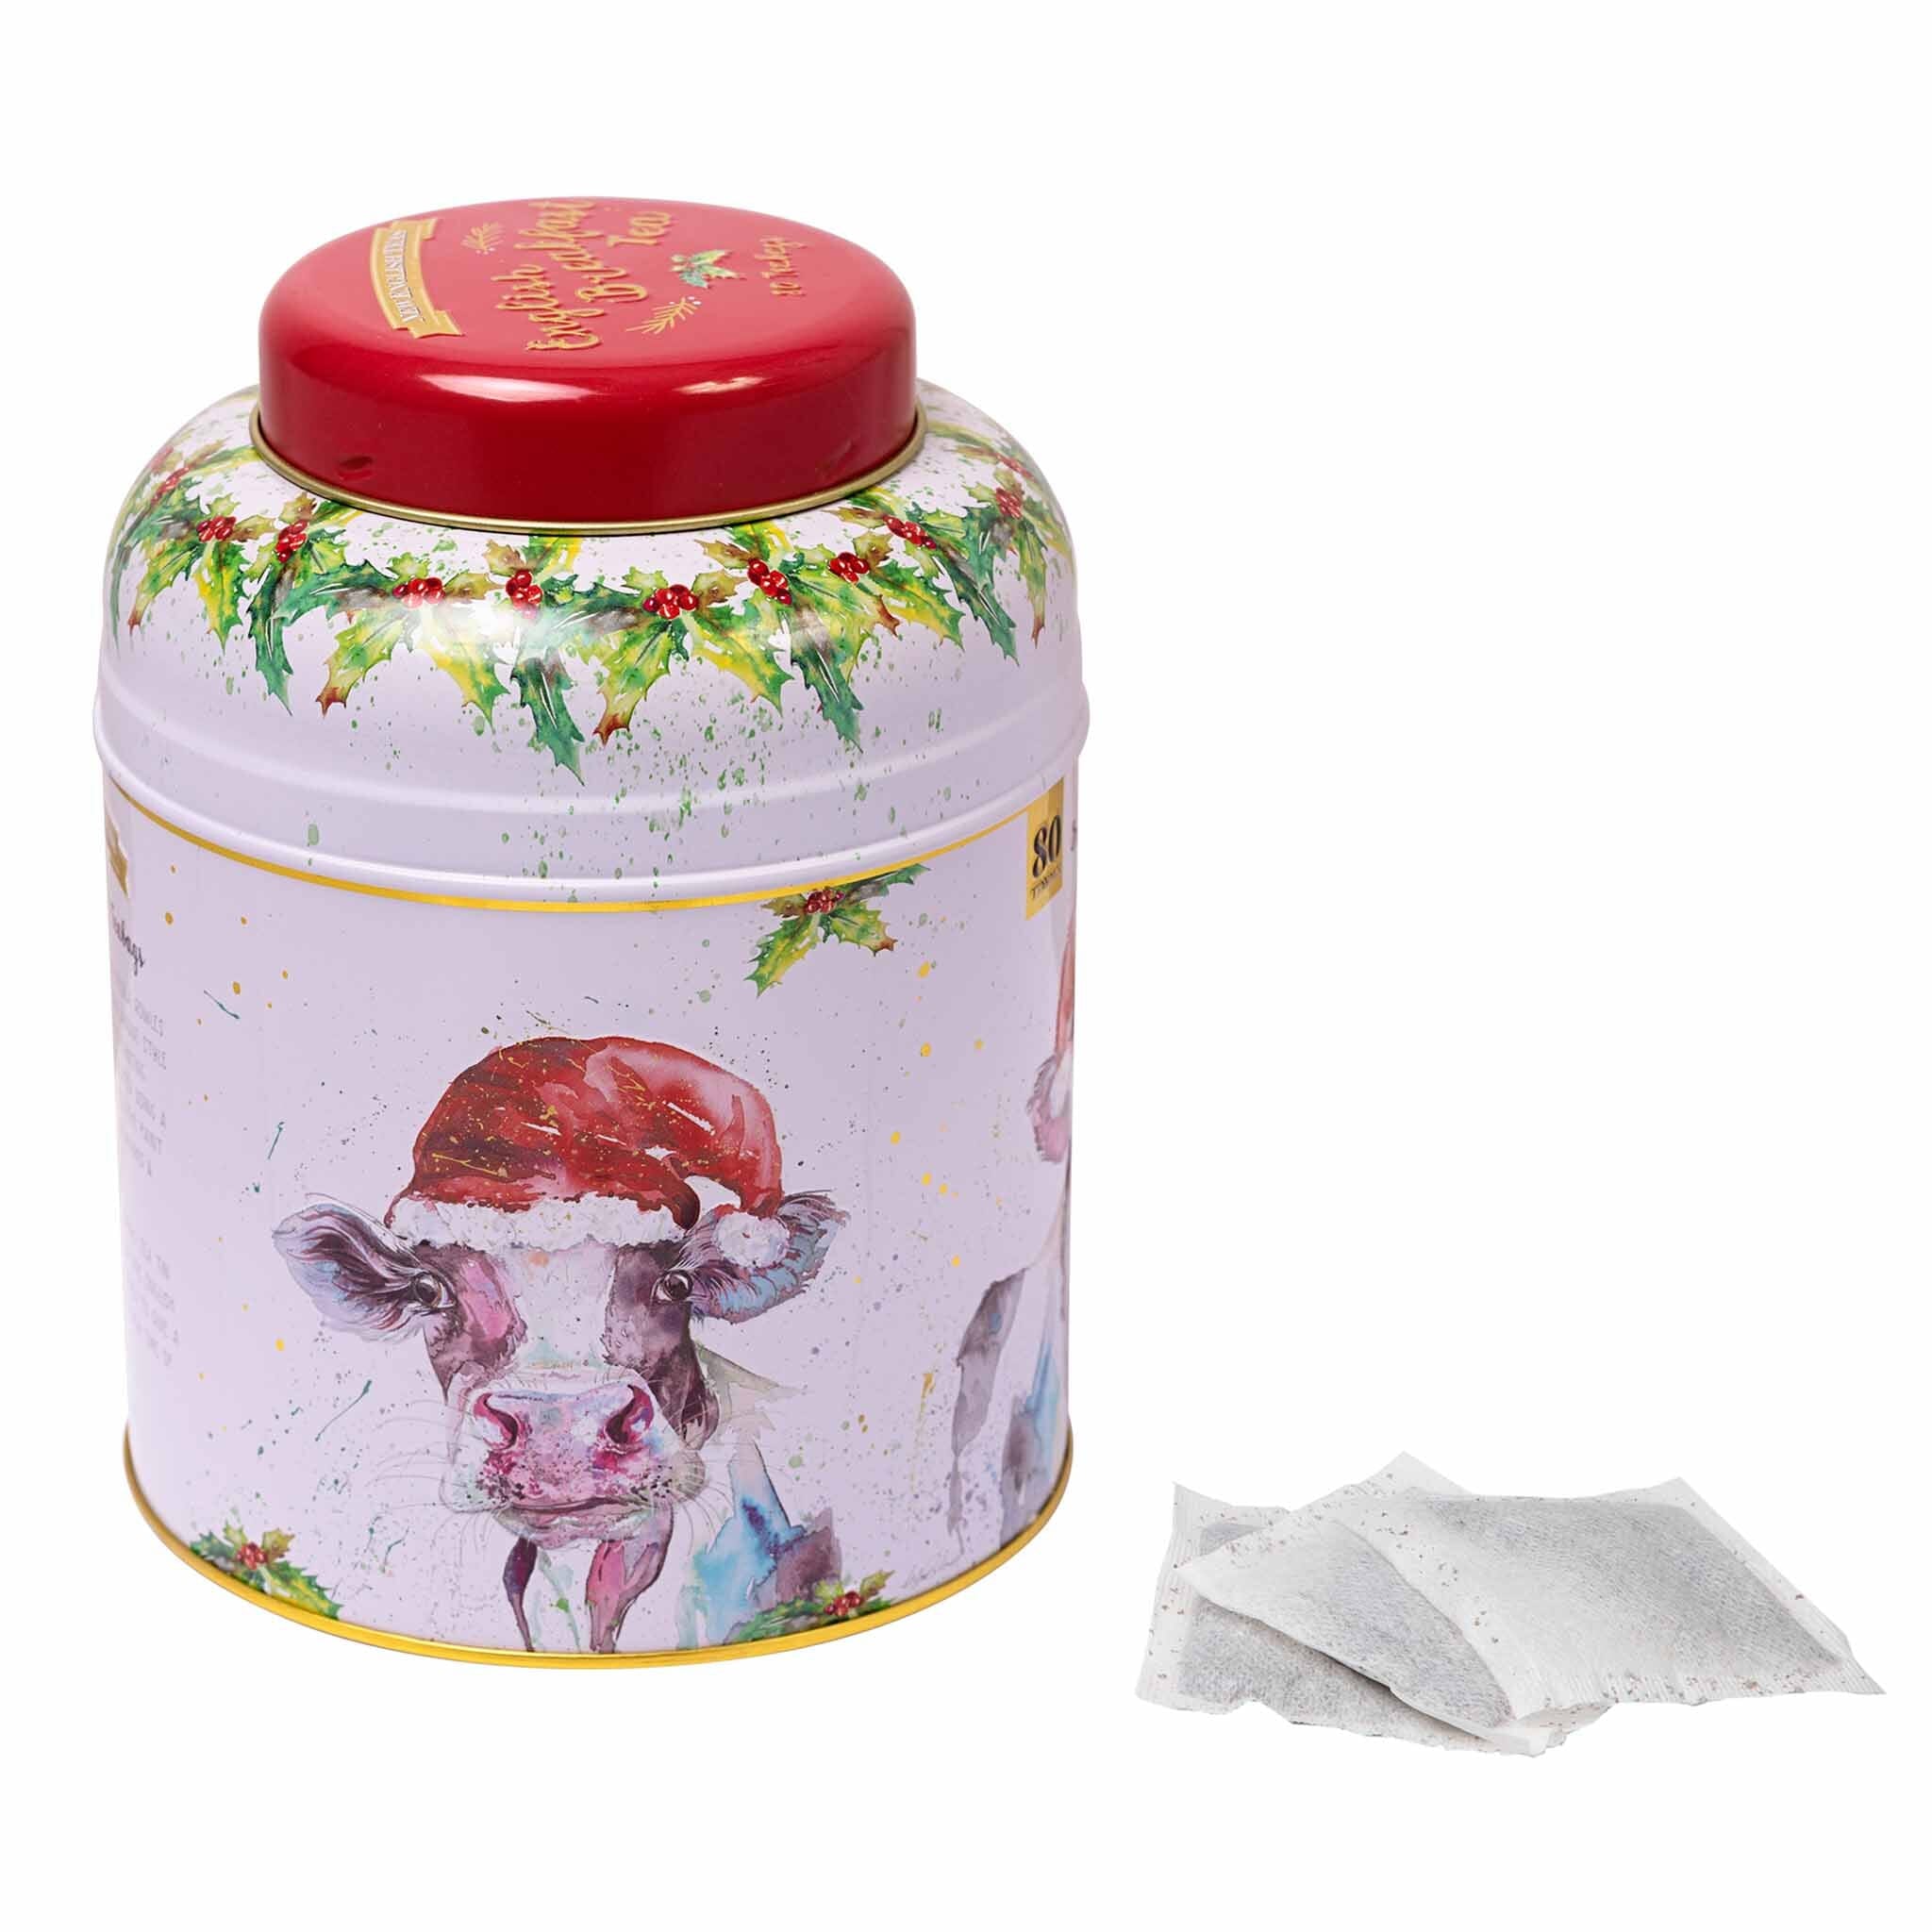 Festive Cow Tea Caddy by Nicola Rowles Tea Tins New English Teas 